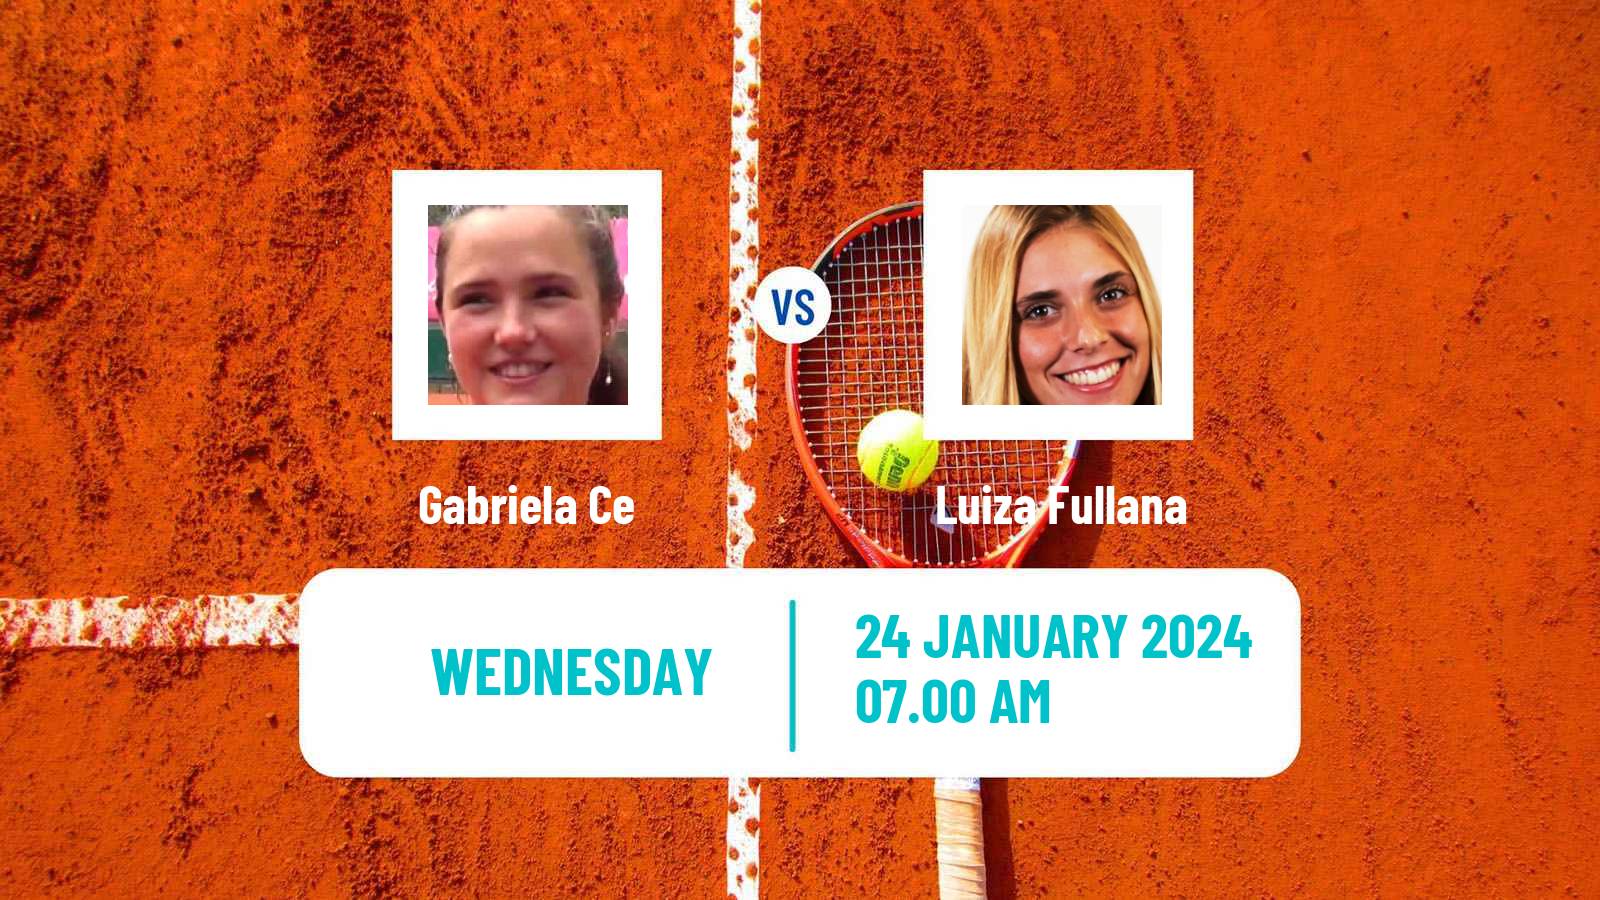 Tennis ITF W35 Buenos Aires 2 Women Gabriela Ce - Luiza Fullana